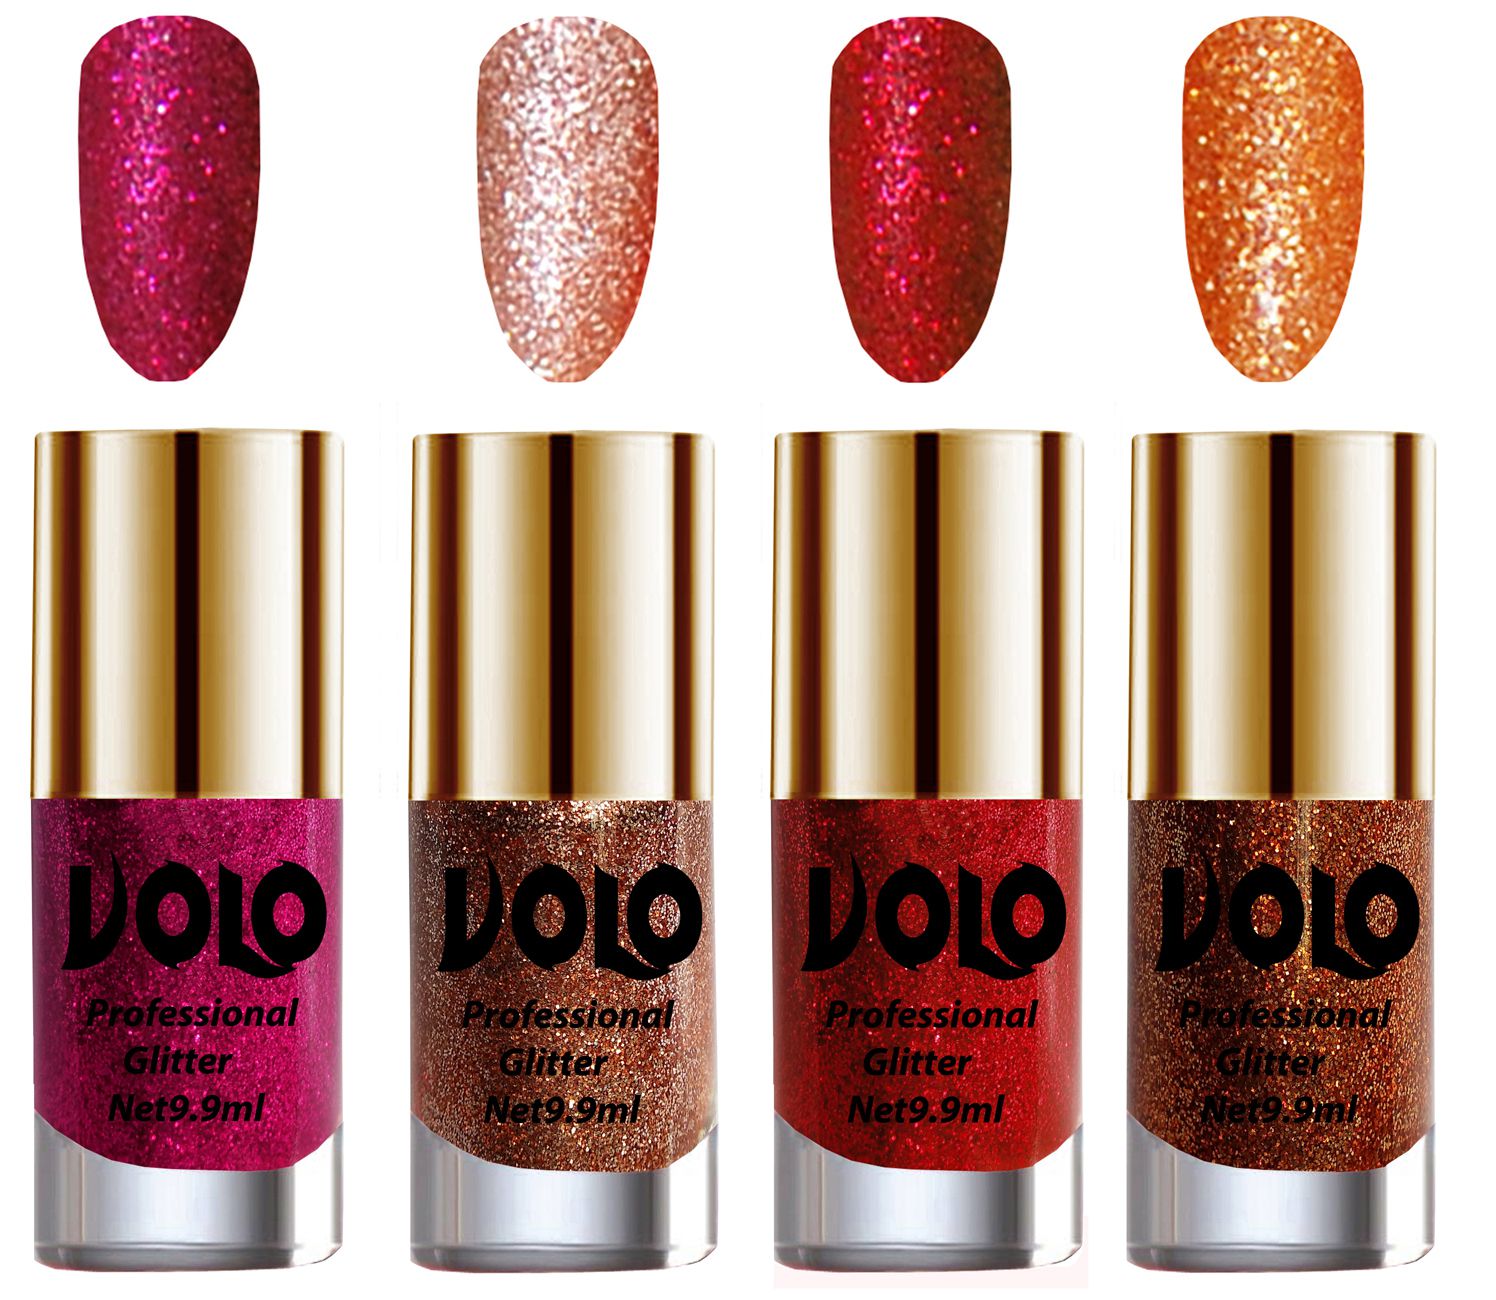     			VOLO Professionally Used Glitter Shine Nail Polish Magenta,Peach,Red Orange Pack of 4 39 mL